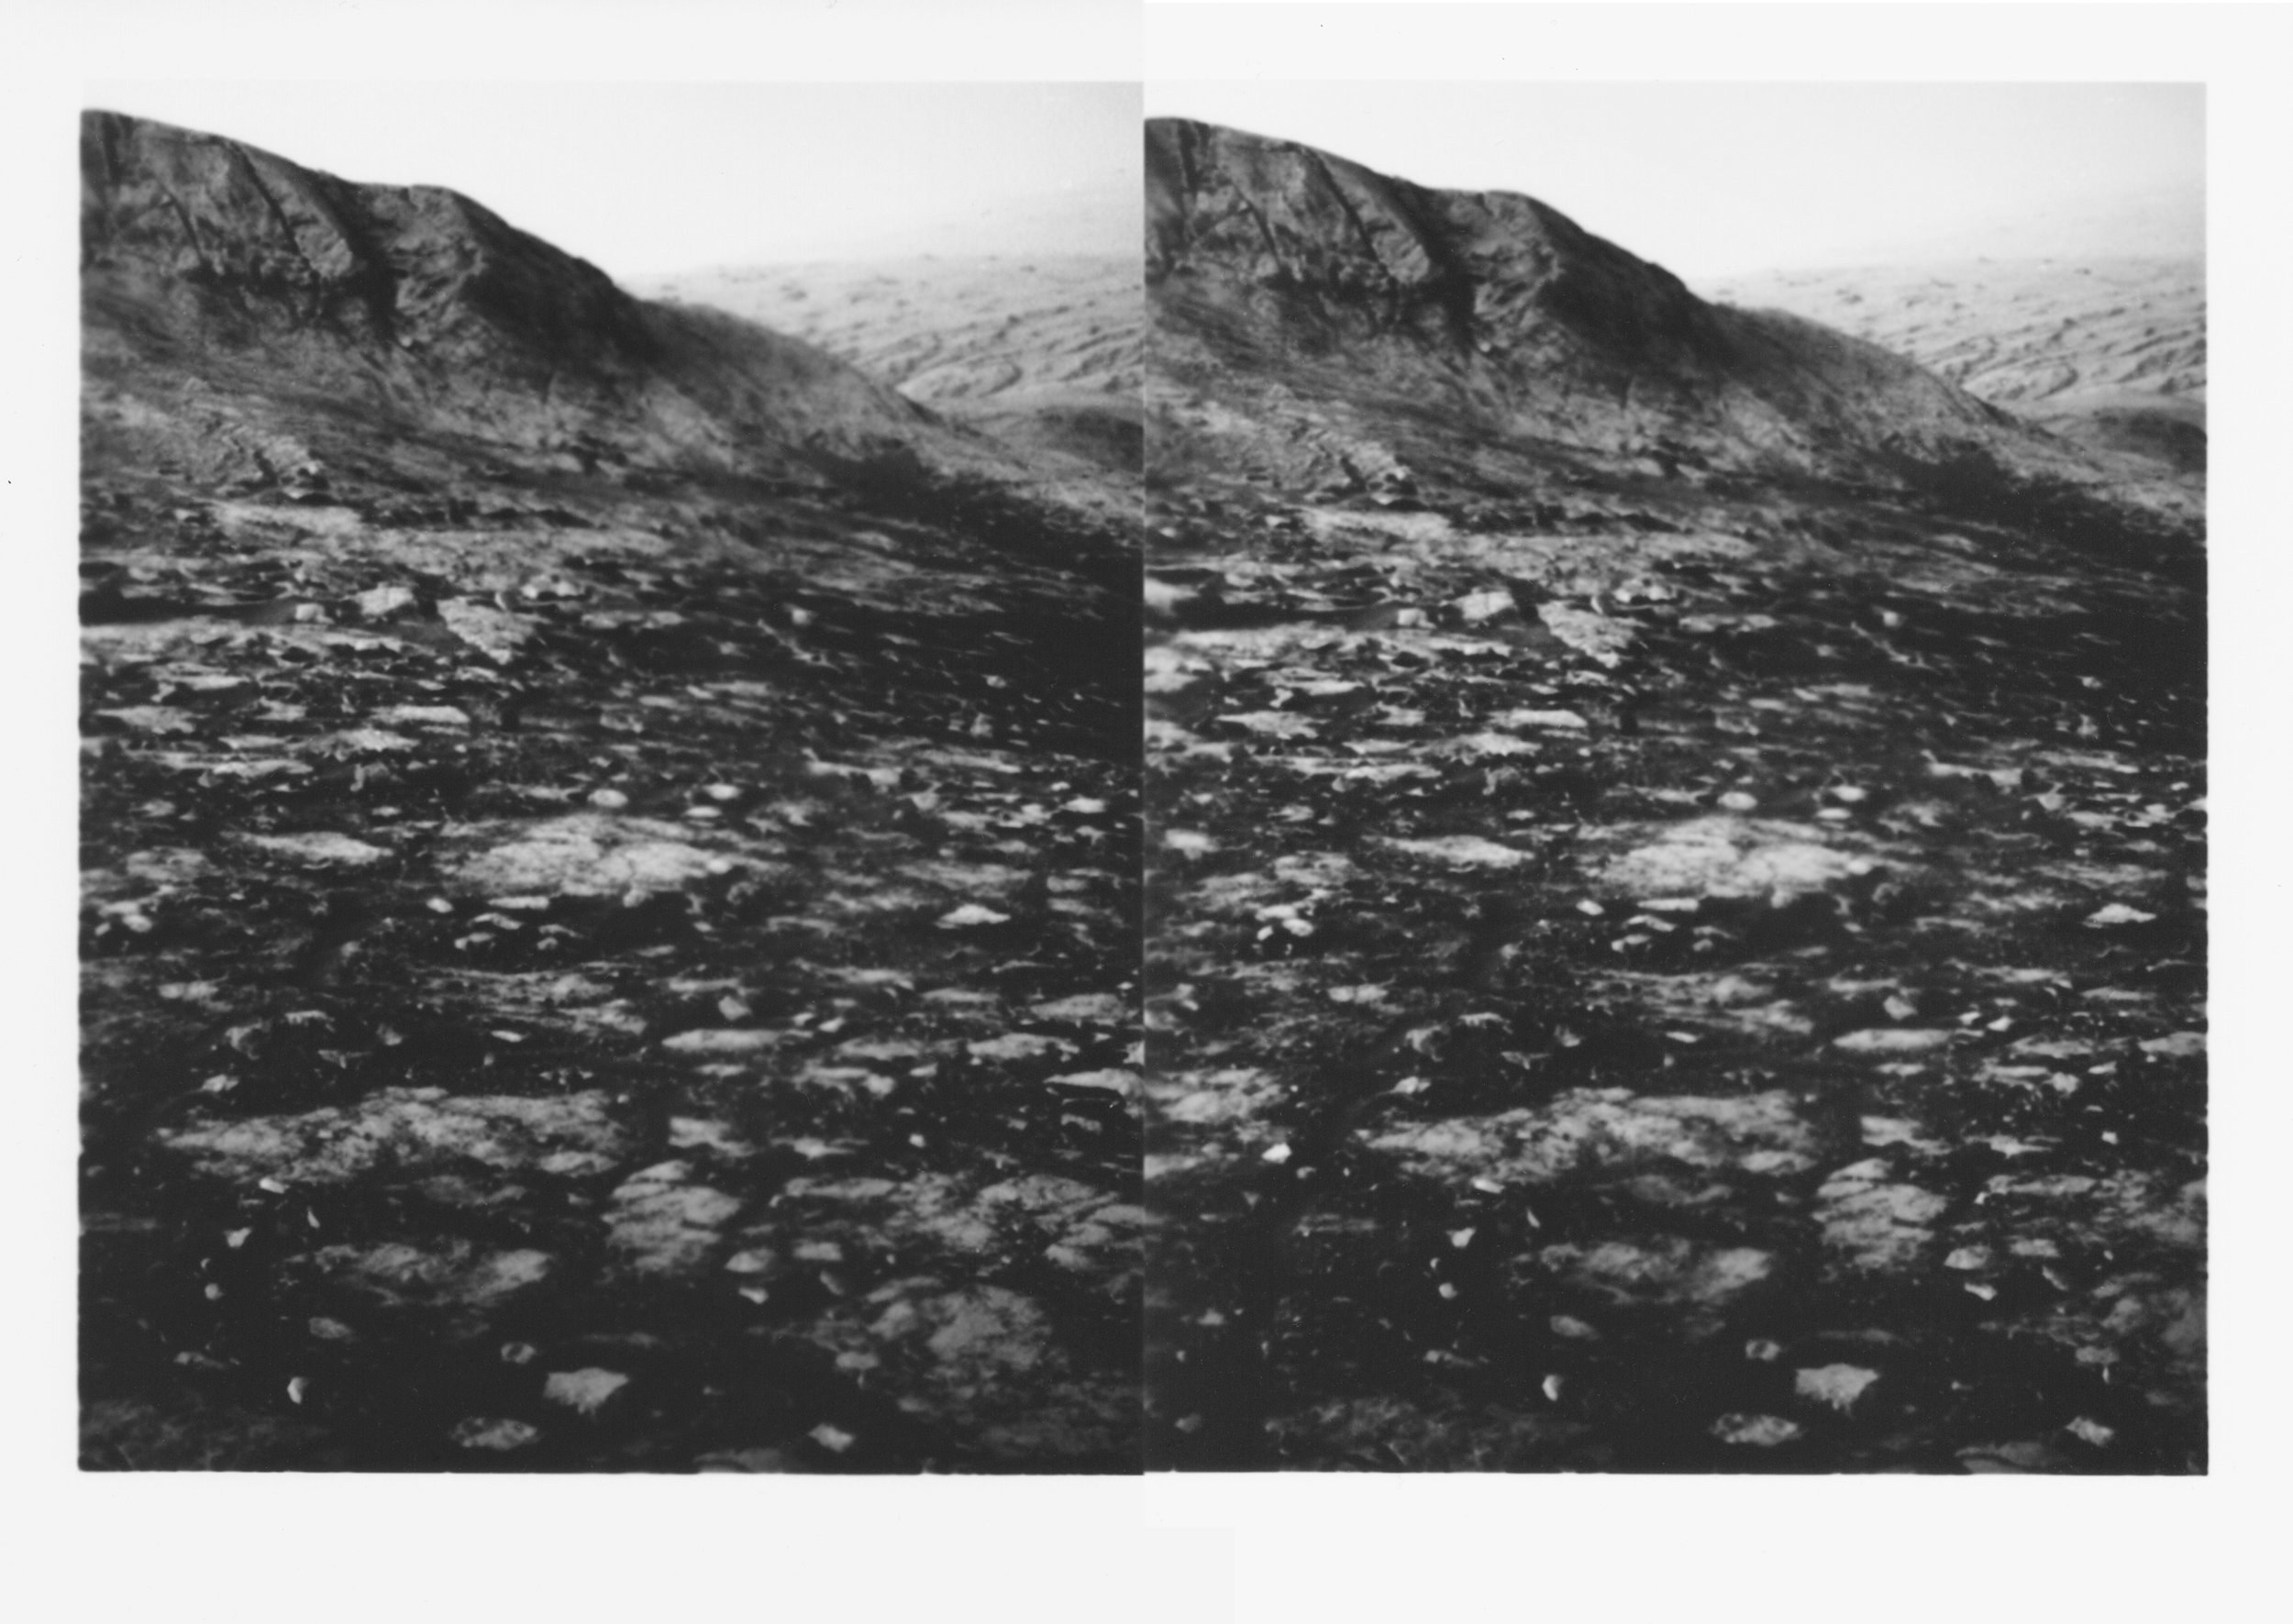   At the Foot of Aeolis Mons: November 2020 - Left View (NASA/JPL-Caltech)    At the Foot of Aeolis Mons: November 2020 - Right View (NASA/JPL-Caltech)  